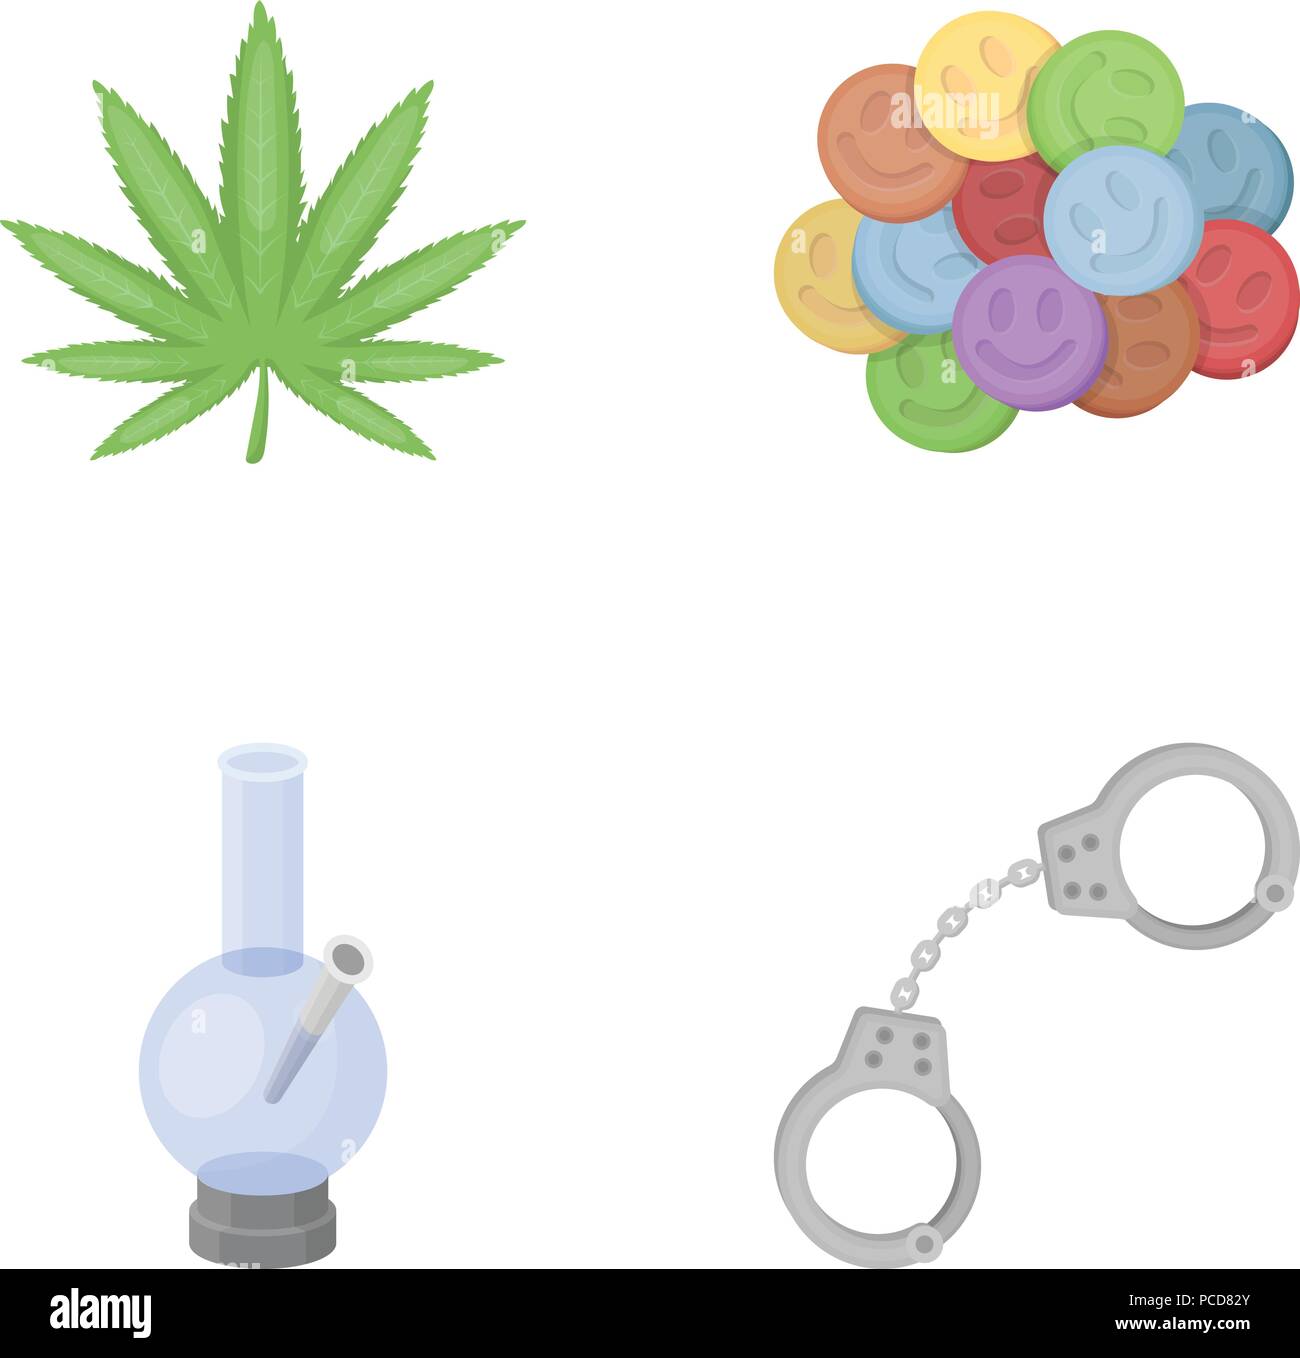 Hanfblatt, Ecstasy Pille, Handschellen, Bong. Droge Sammlung Icons im  Comic-stil Vektor Symbol lieferbar Abbildung Stock-Vektorgrafik - Alamy